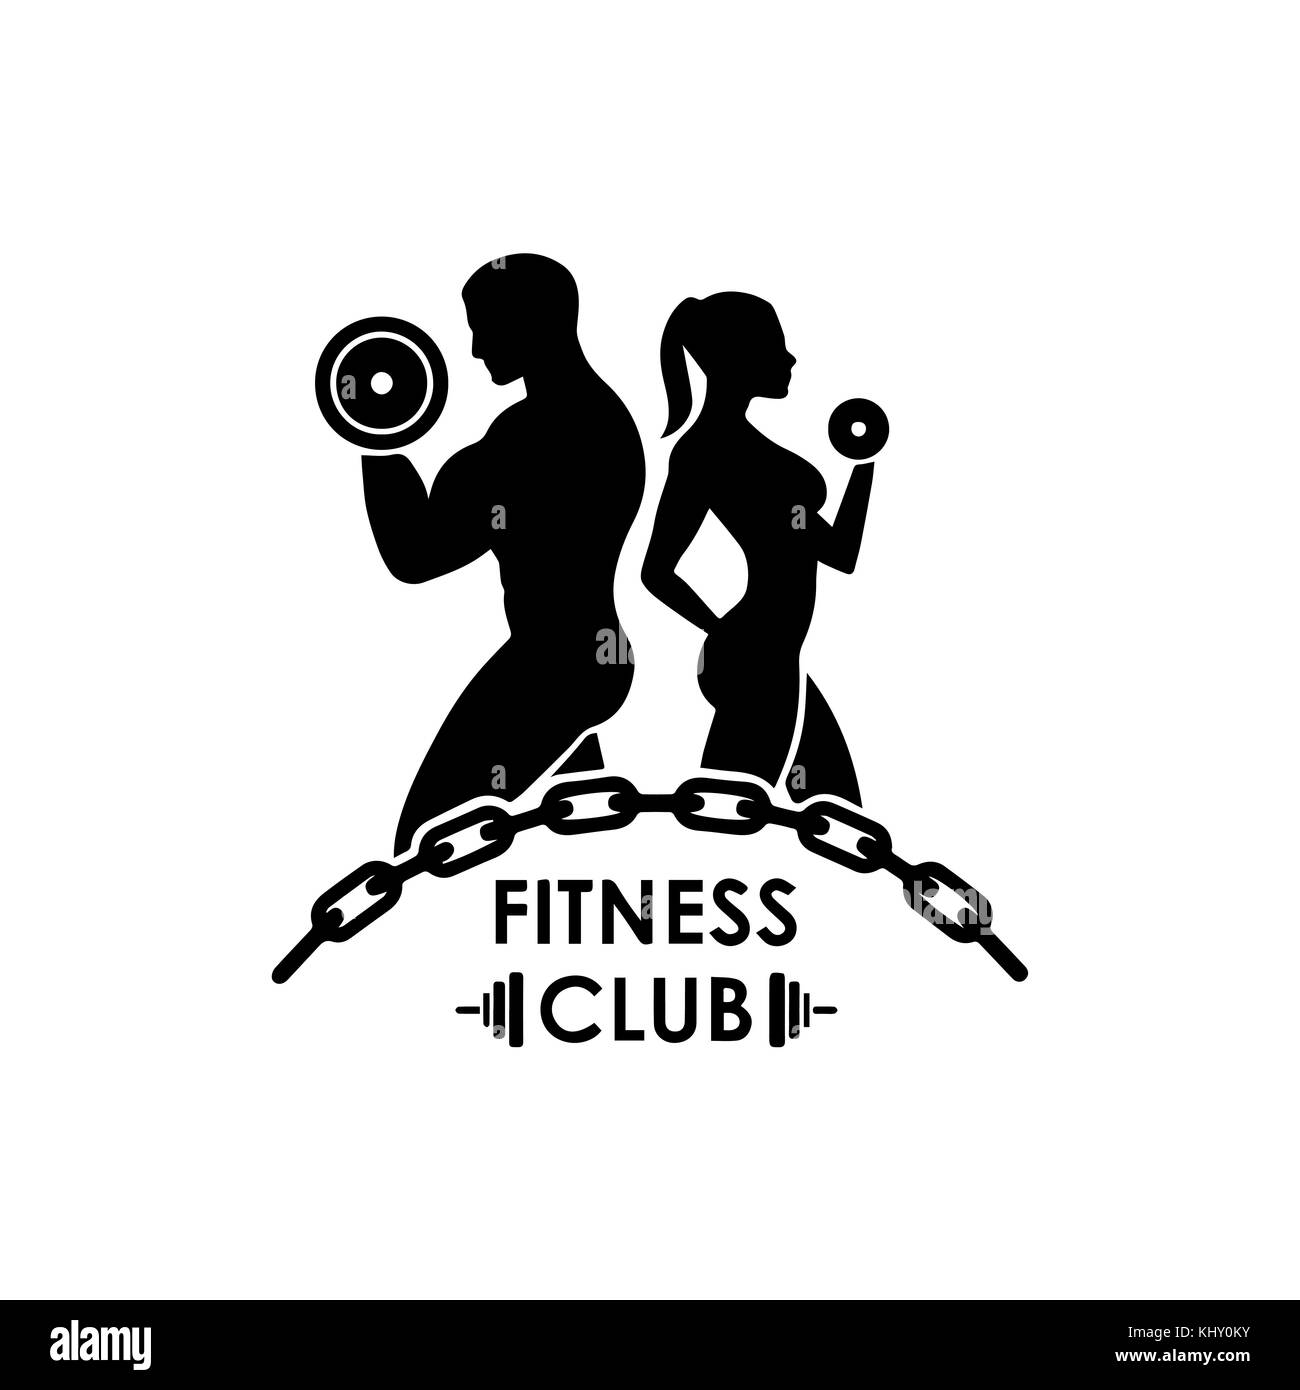 Fitness club logo Stock Photo